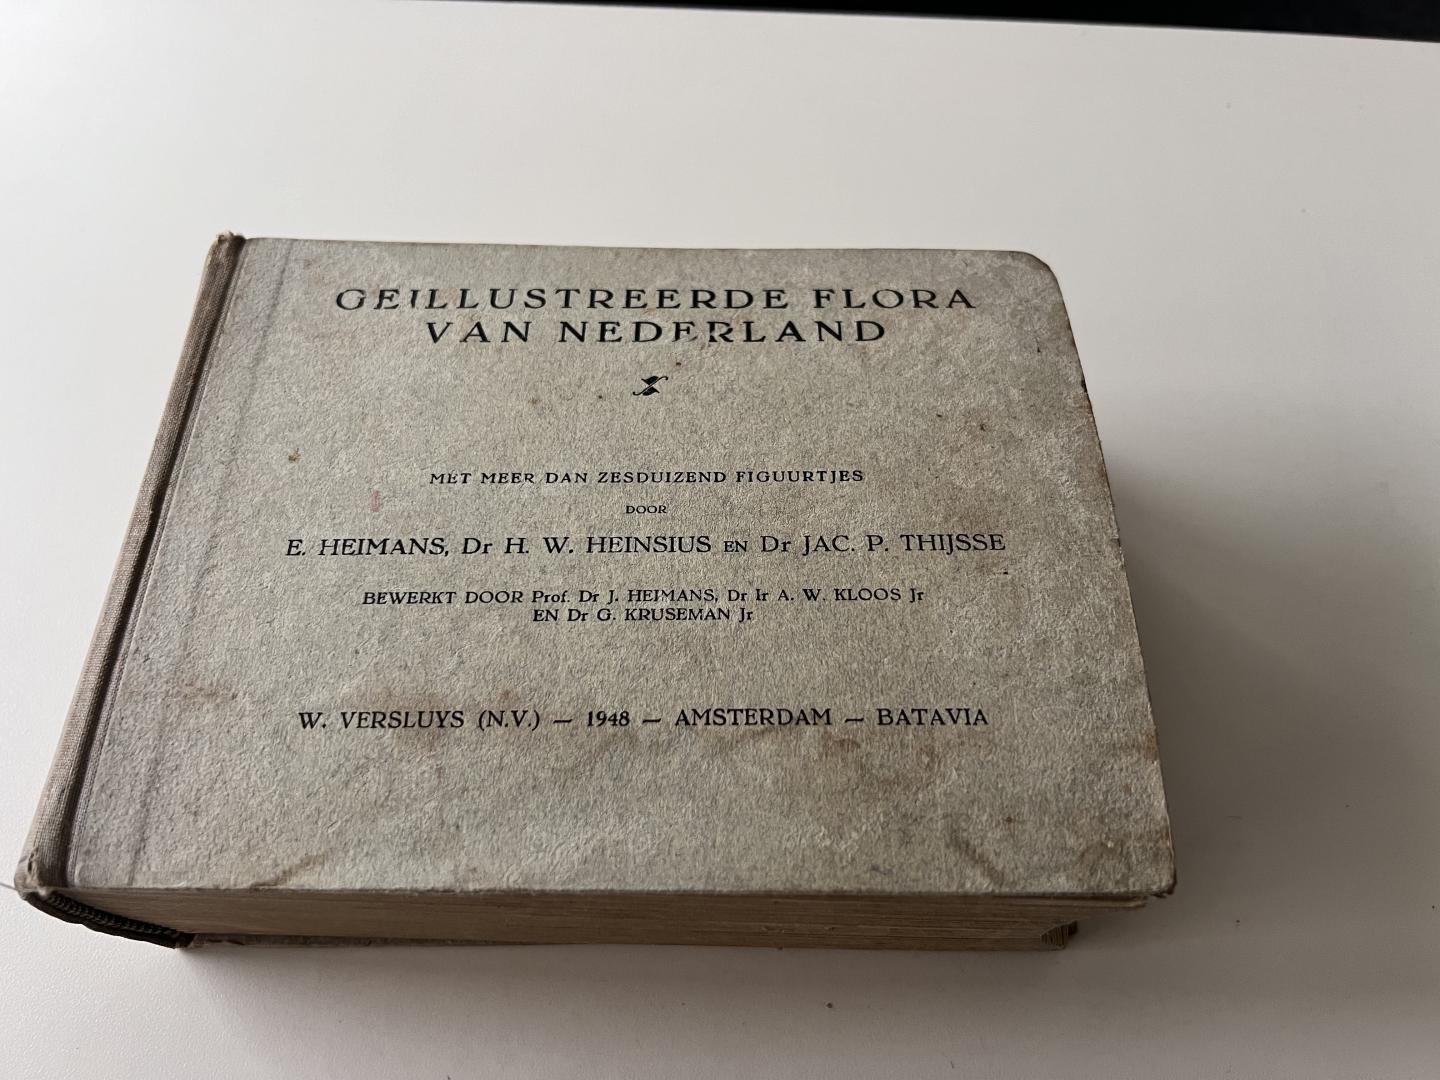 E. Heimans, Dr H.W. Heinsius en Dr Jac. P. Thijsse - Geillustreerde flora van Nederland